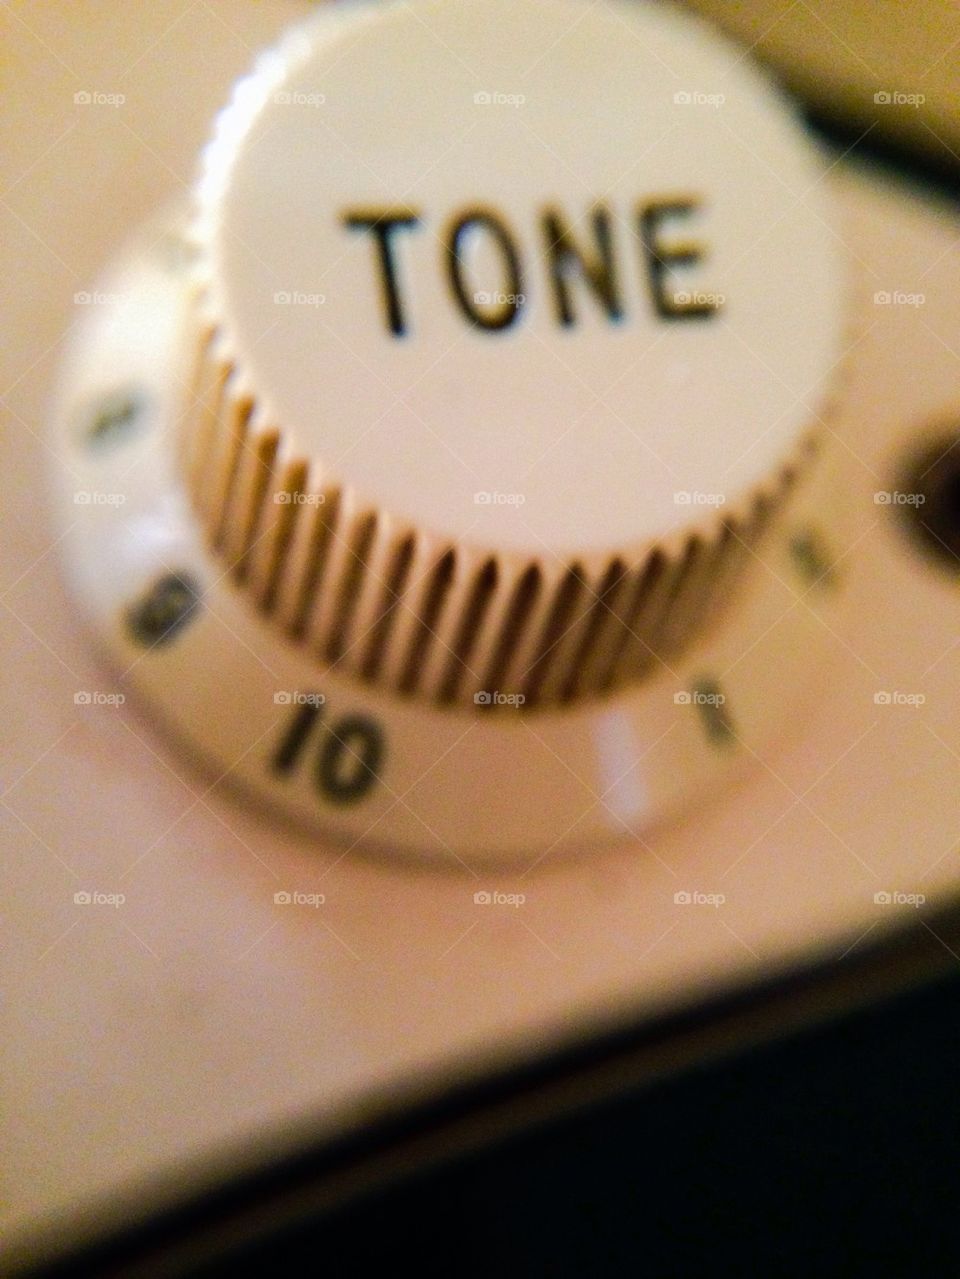 Tone Control